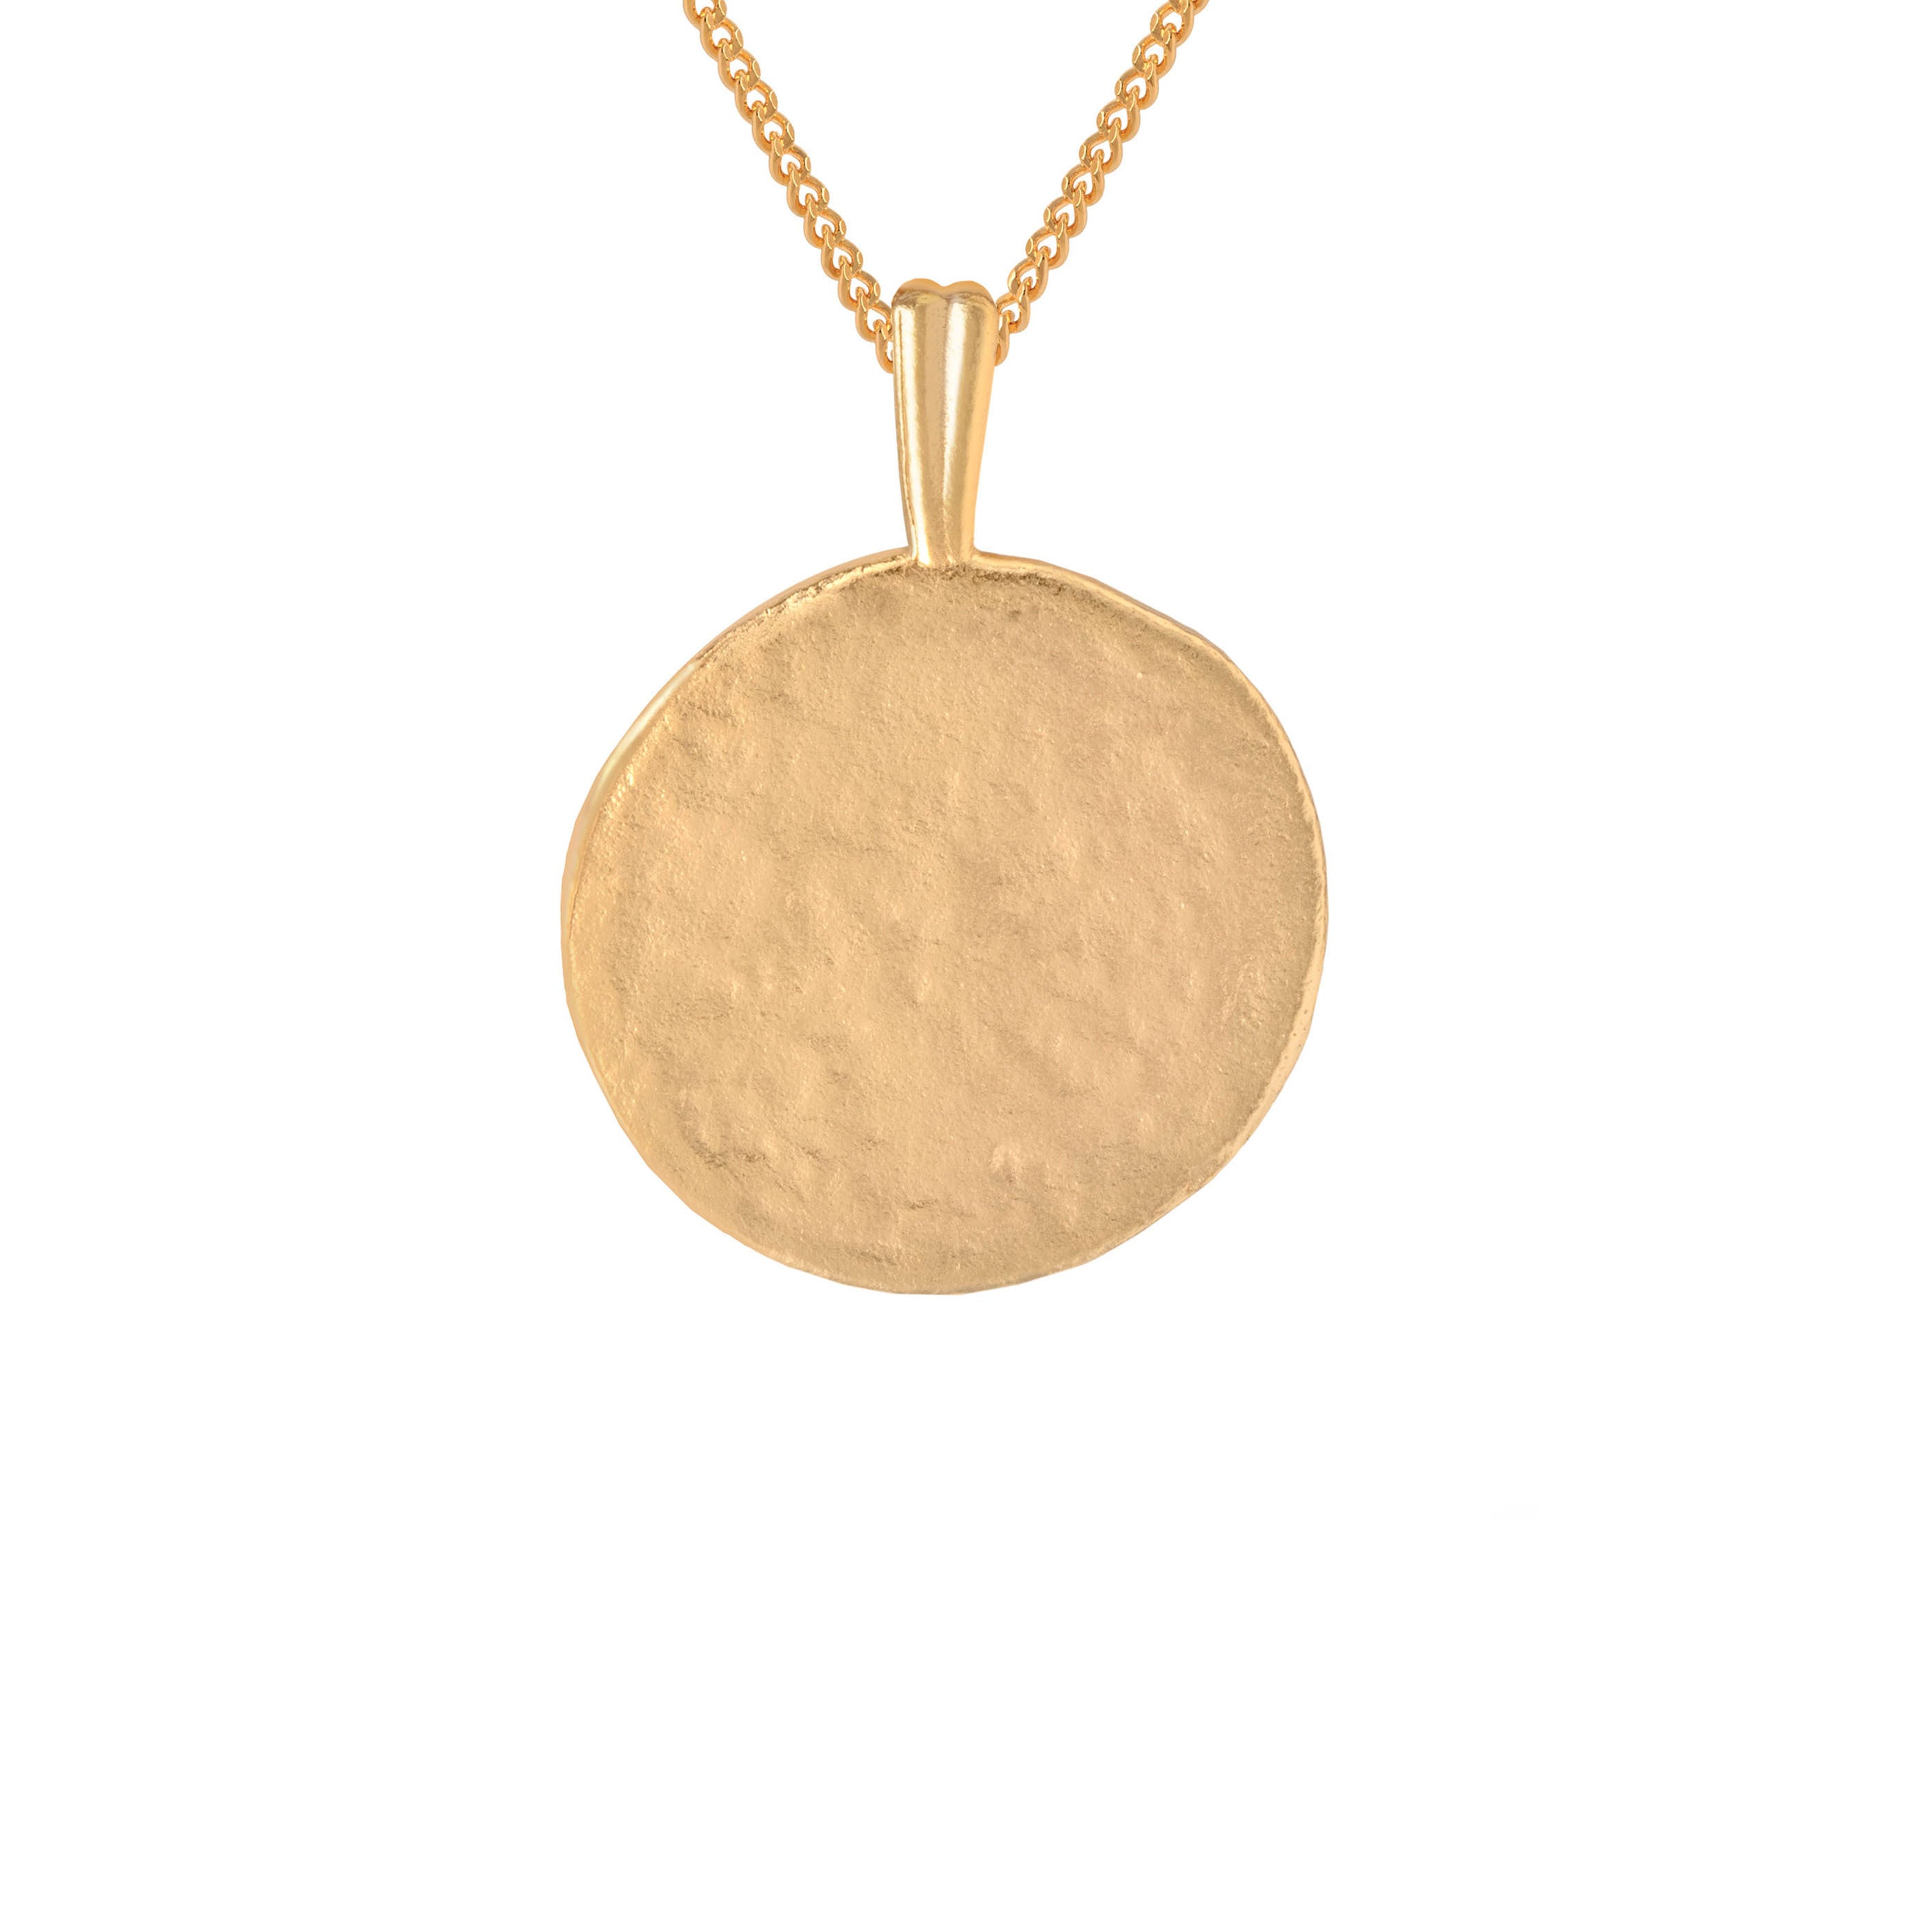 Aquarius Zodiac Pendant Necklace in Gold back of pendant